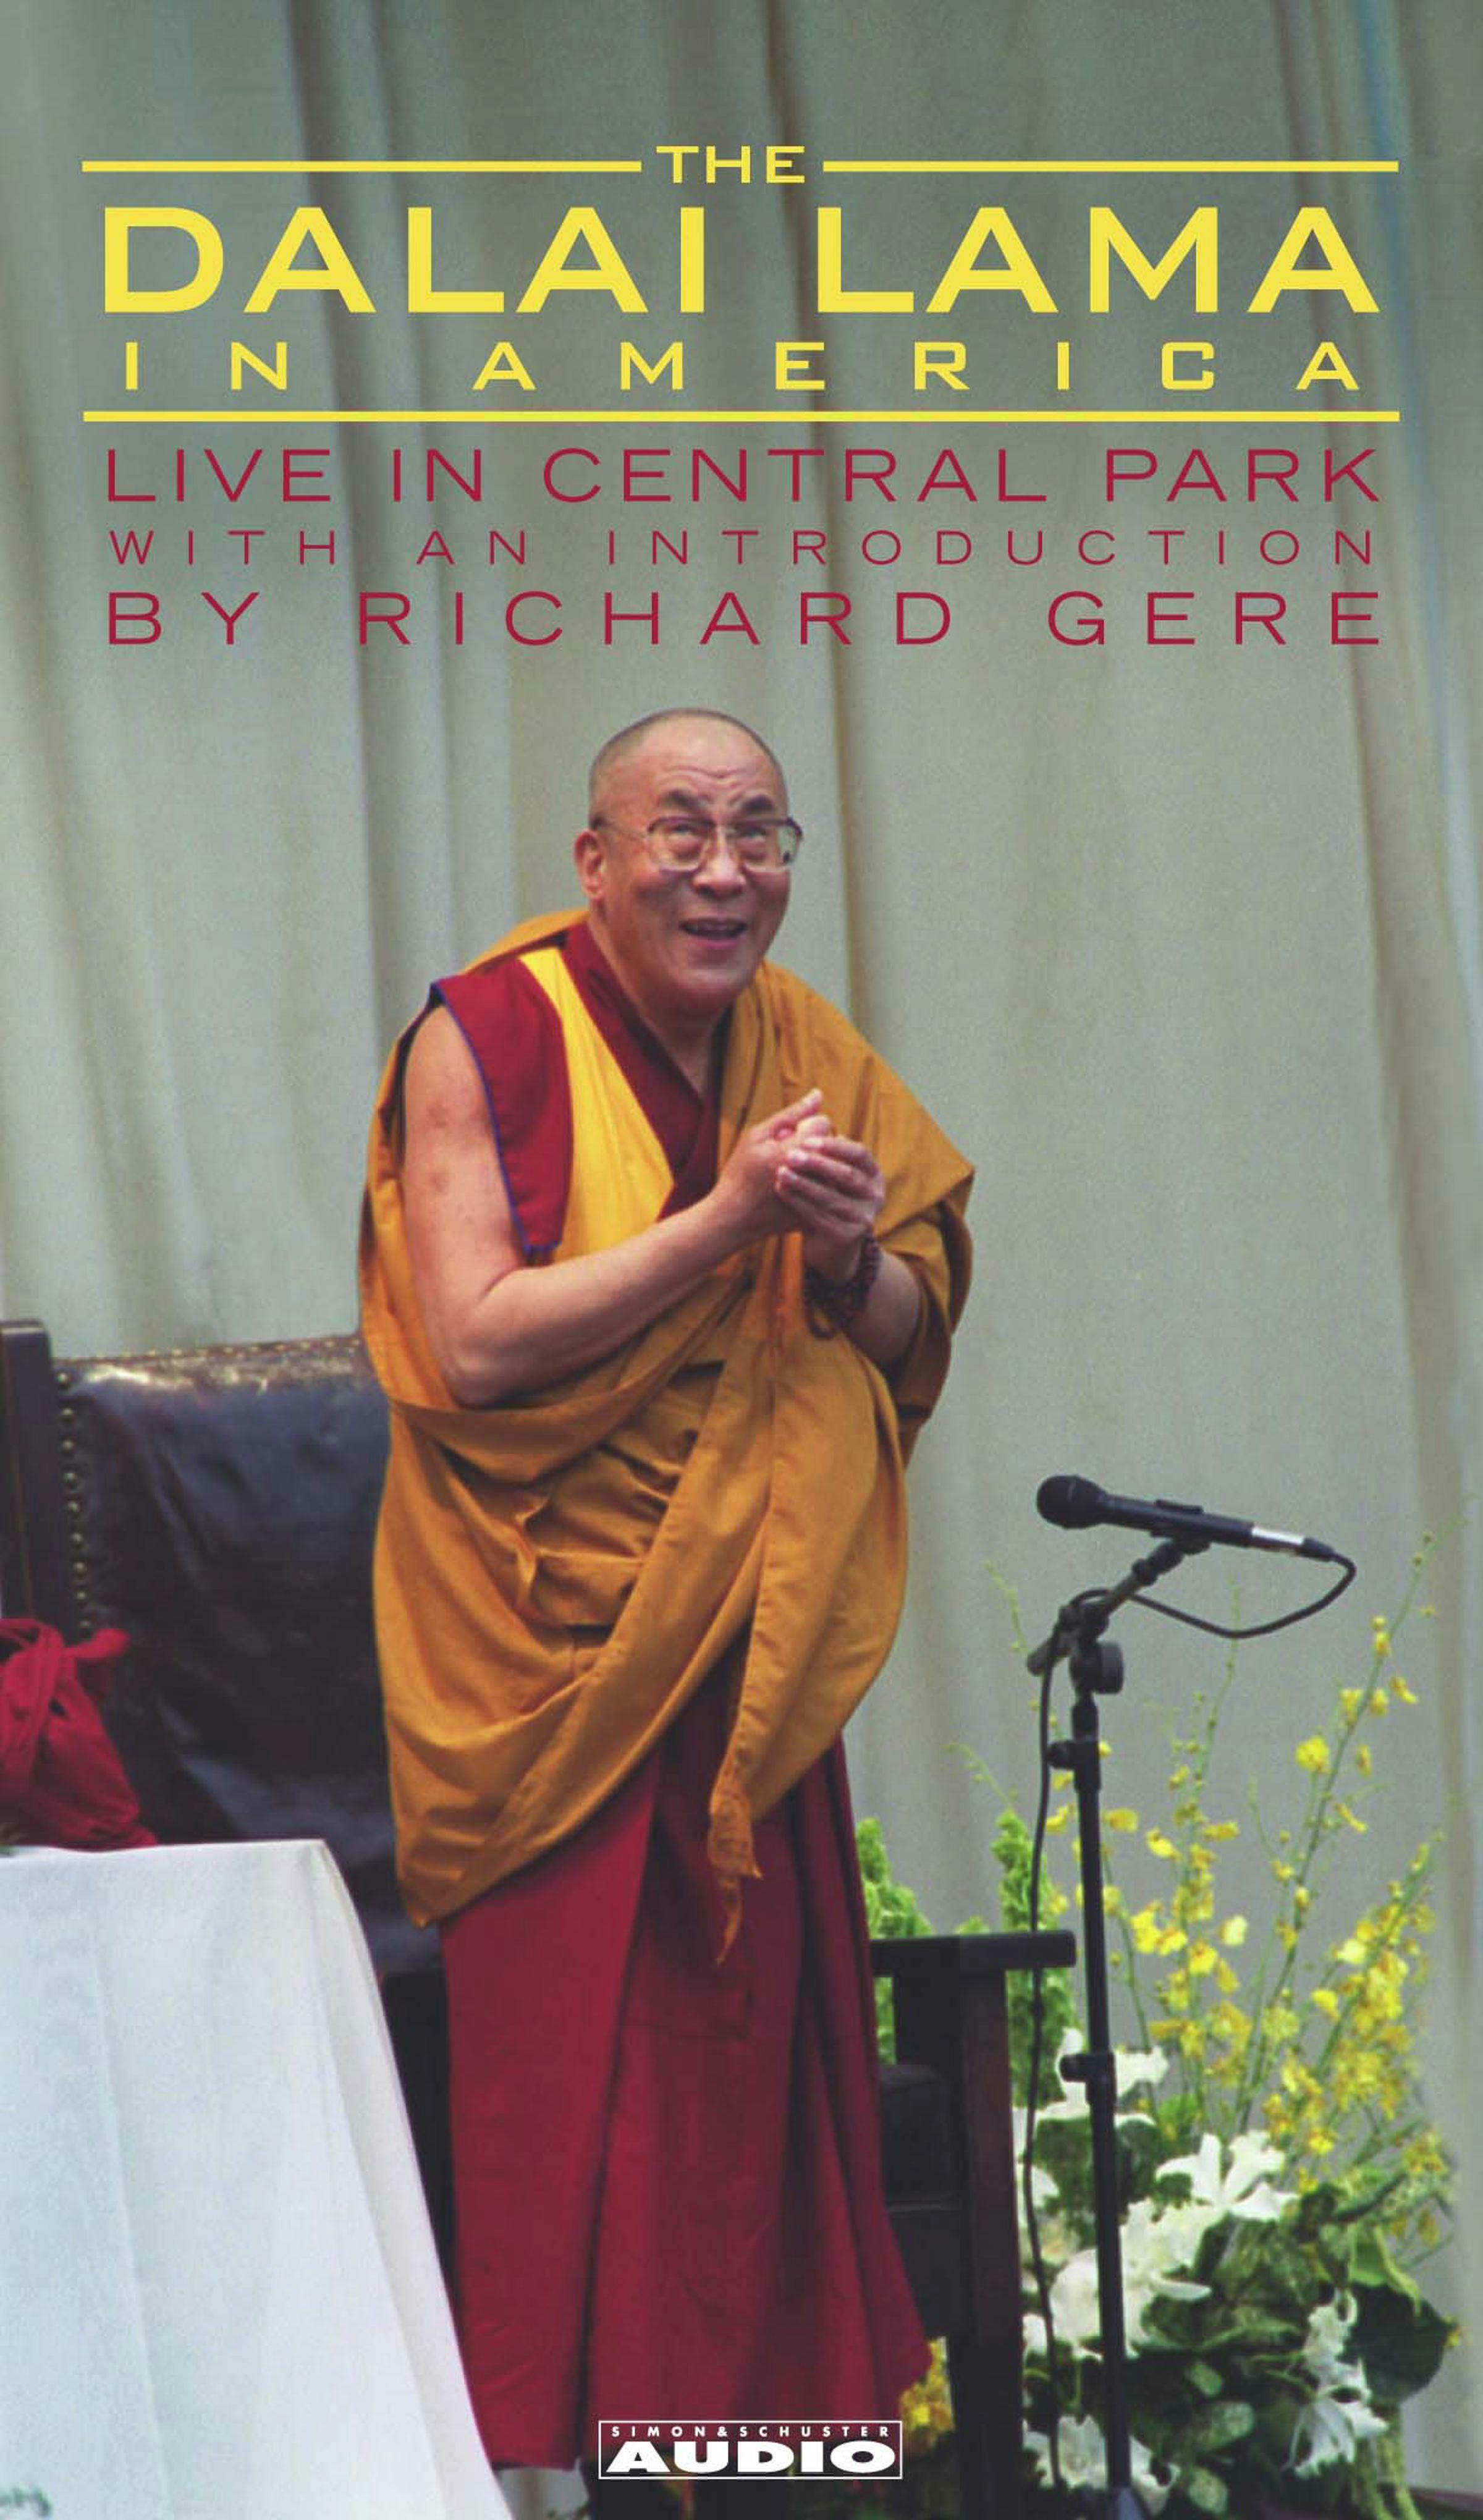 The Dalai Lama in America:Central Park Lecture - His Holiness the Dalai Lama